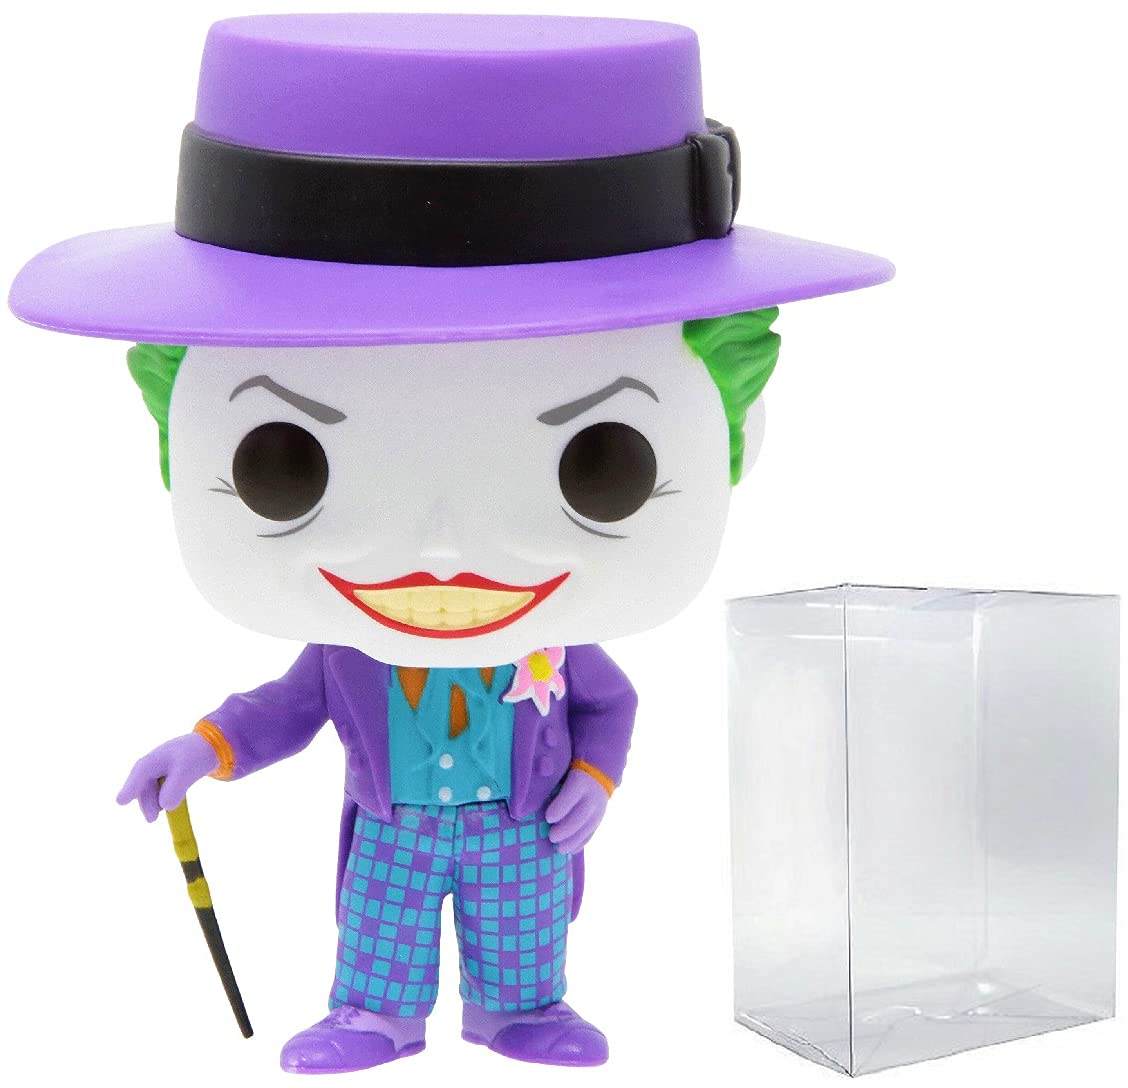 Mua POP DC Heroes: Batman 80th - Joker with Hat (1989) Funko Pop! Vinyl  Figure (Bundled with Compatible Pop Box Protector Case), Multicolored,   inches trên Amazon Mỹ chính hãng 2023 | Giaonhan247